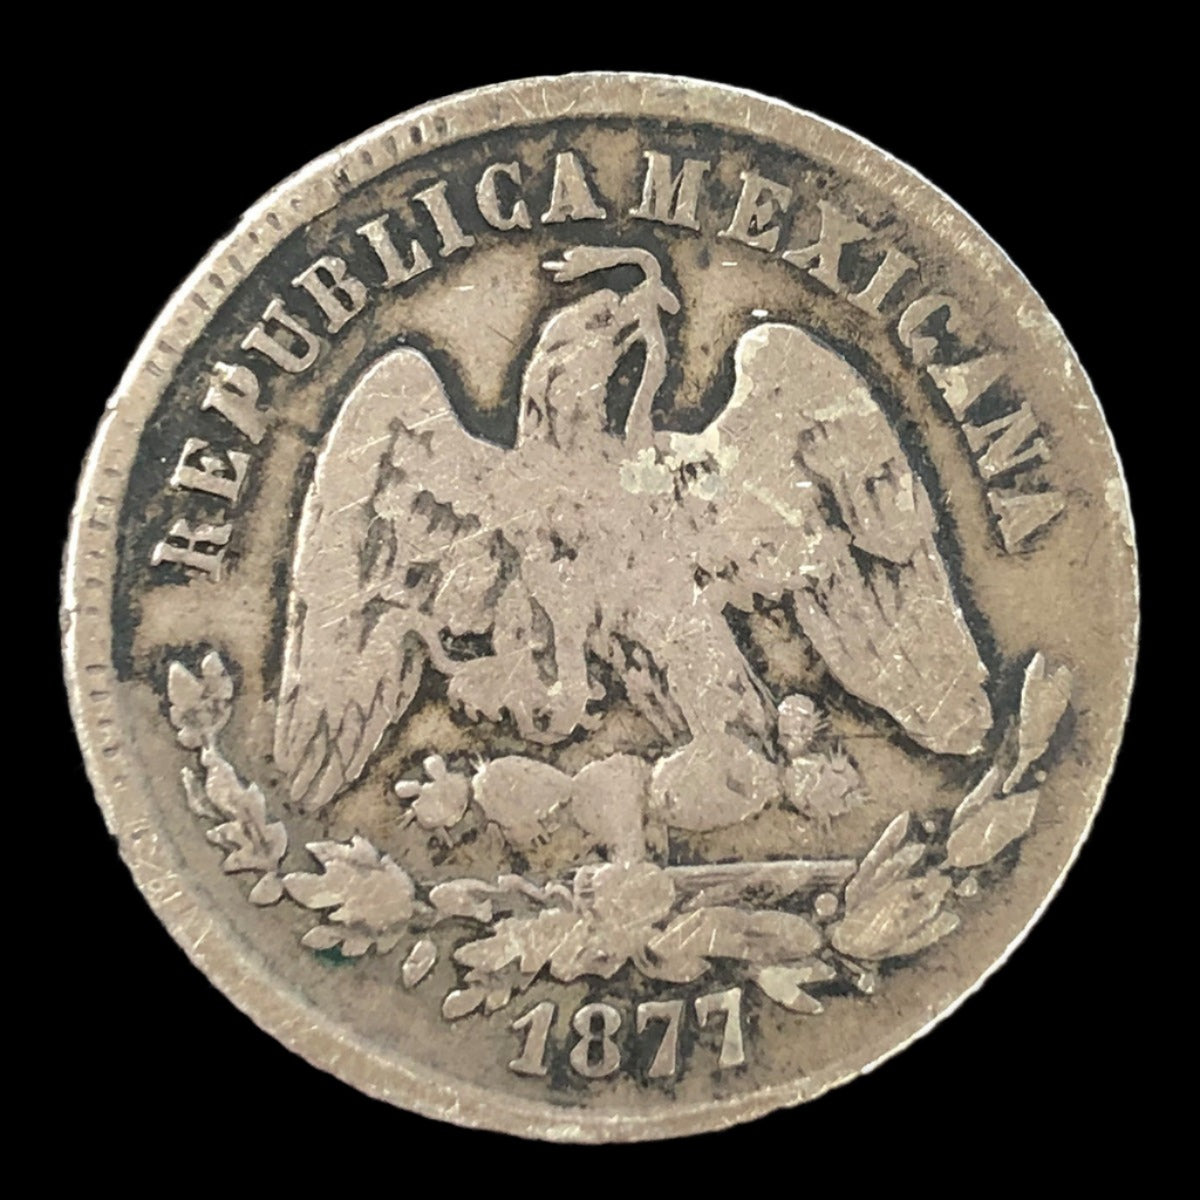 1877Zs S 25 Centavos Zacatecas Mexico